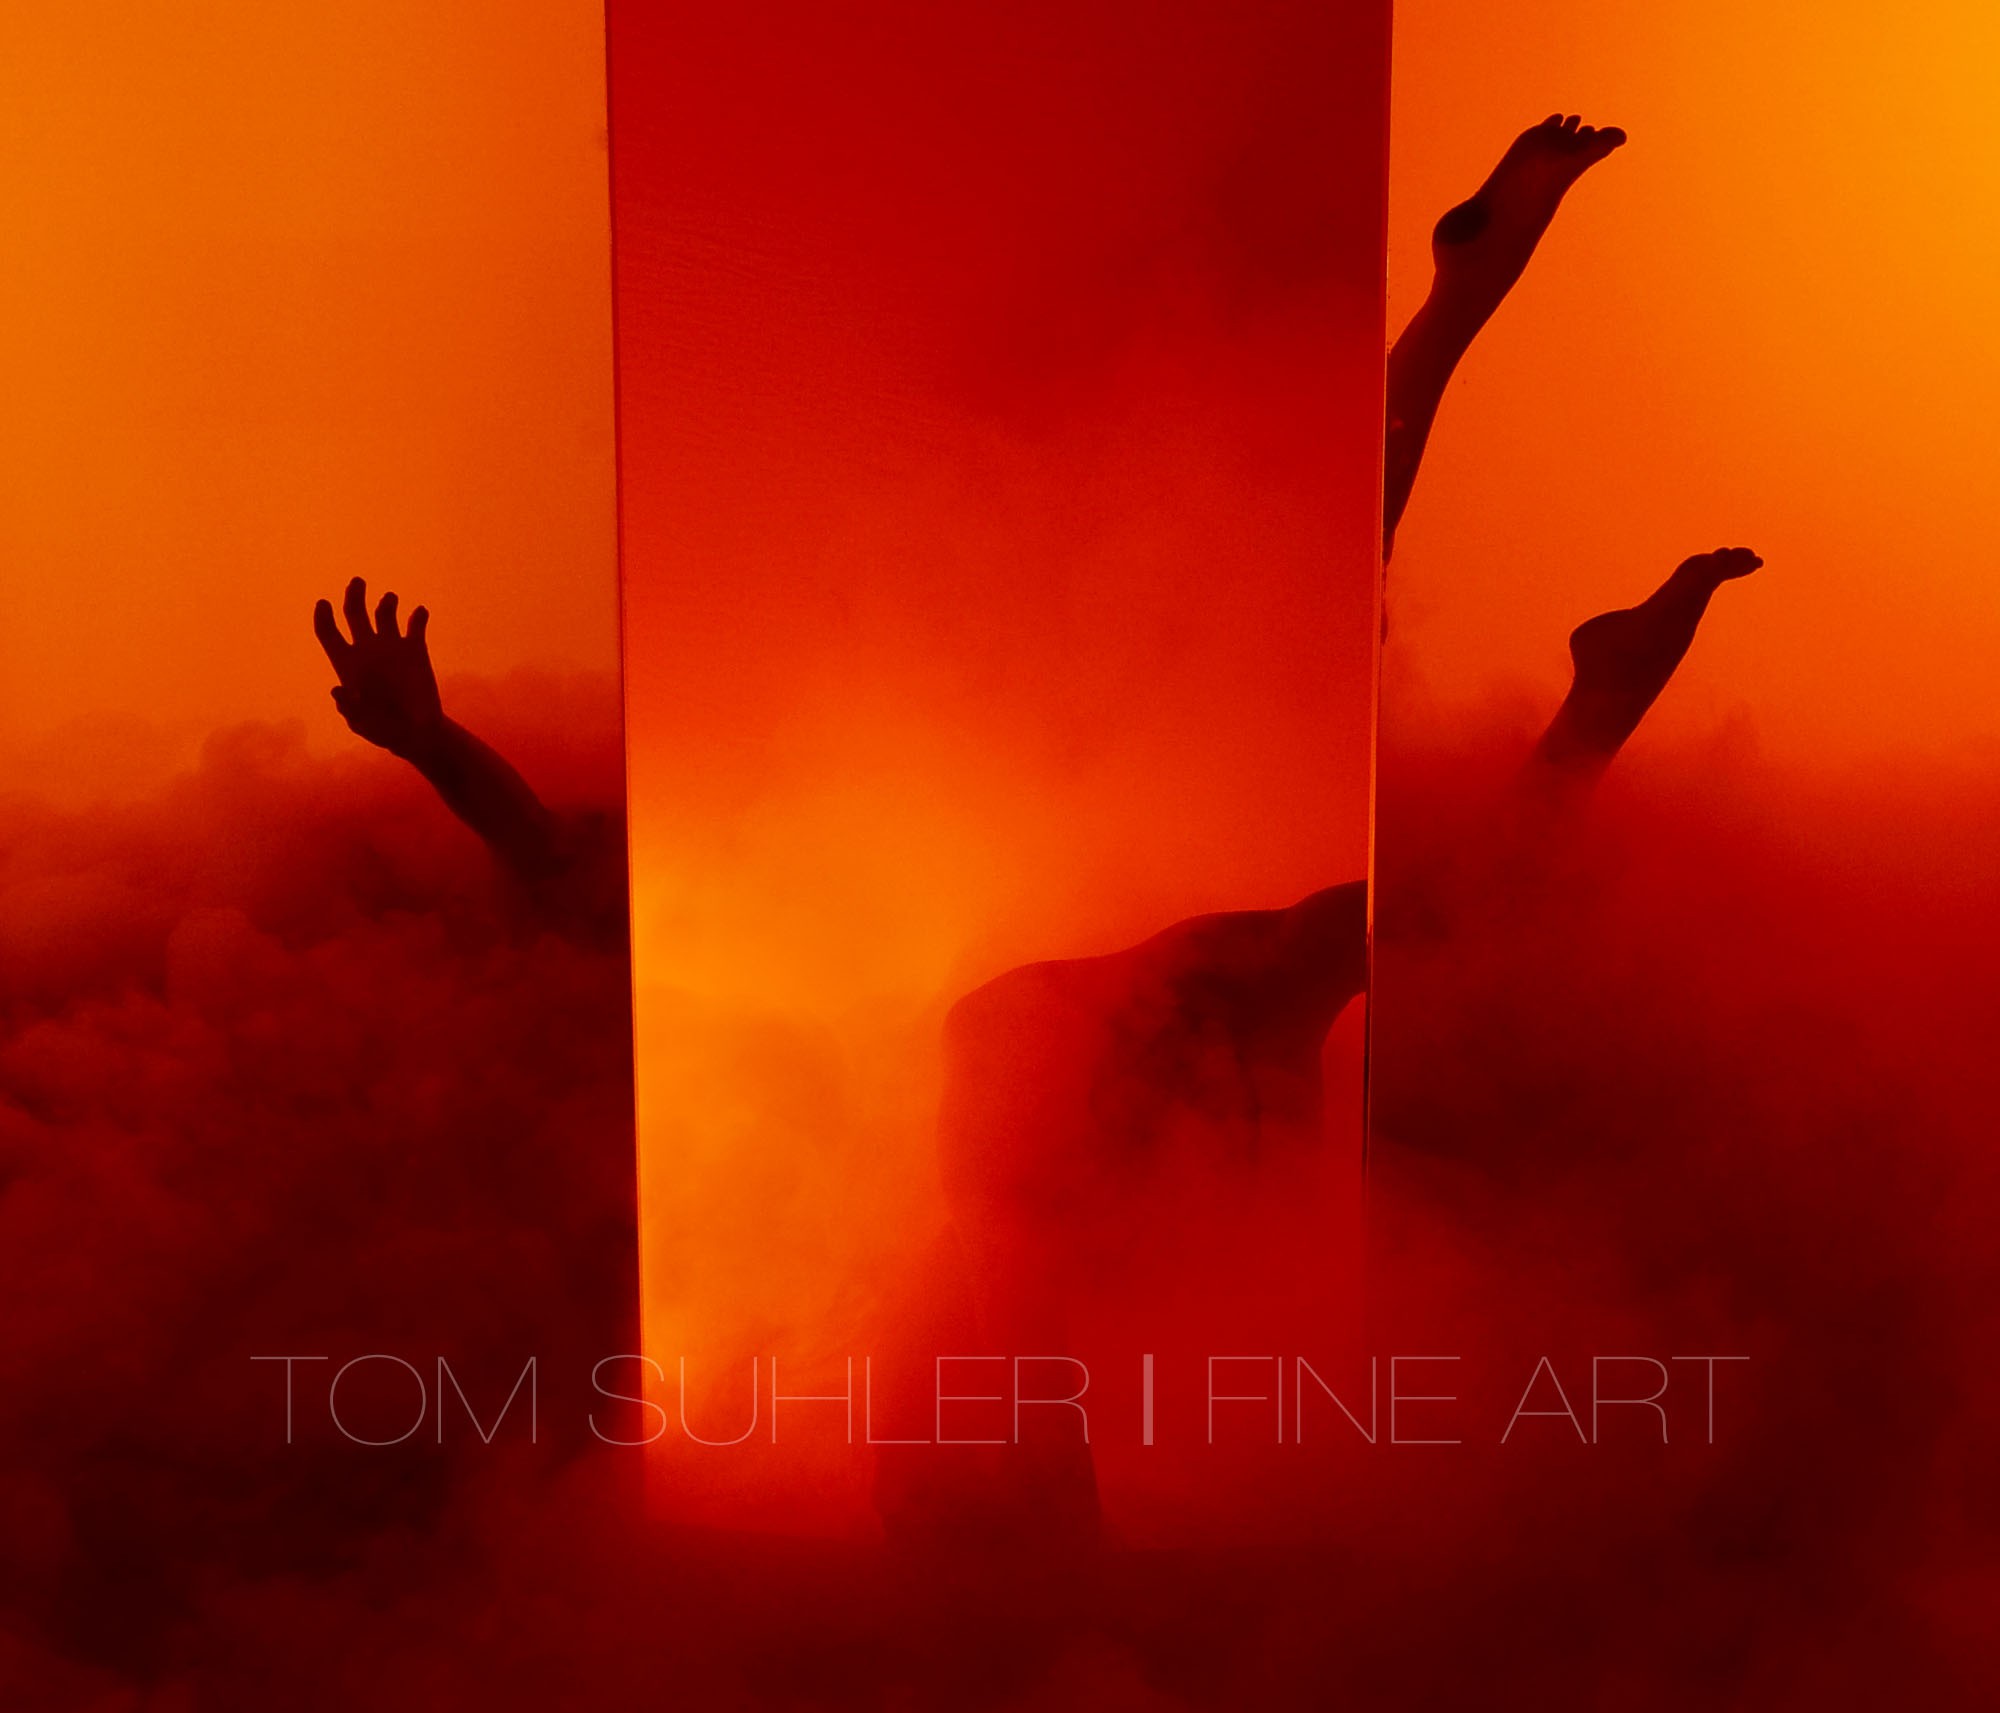 Un-titled #2 - Tom Suhler